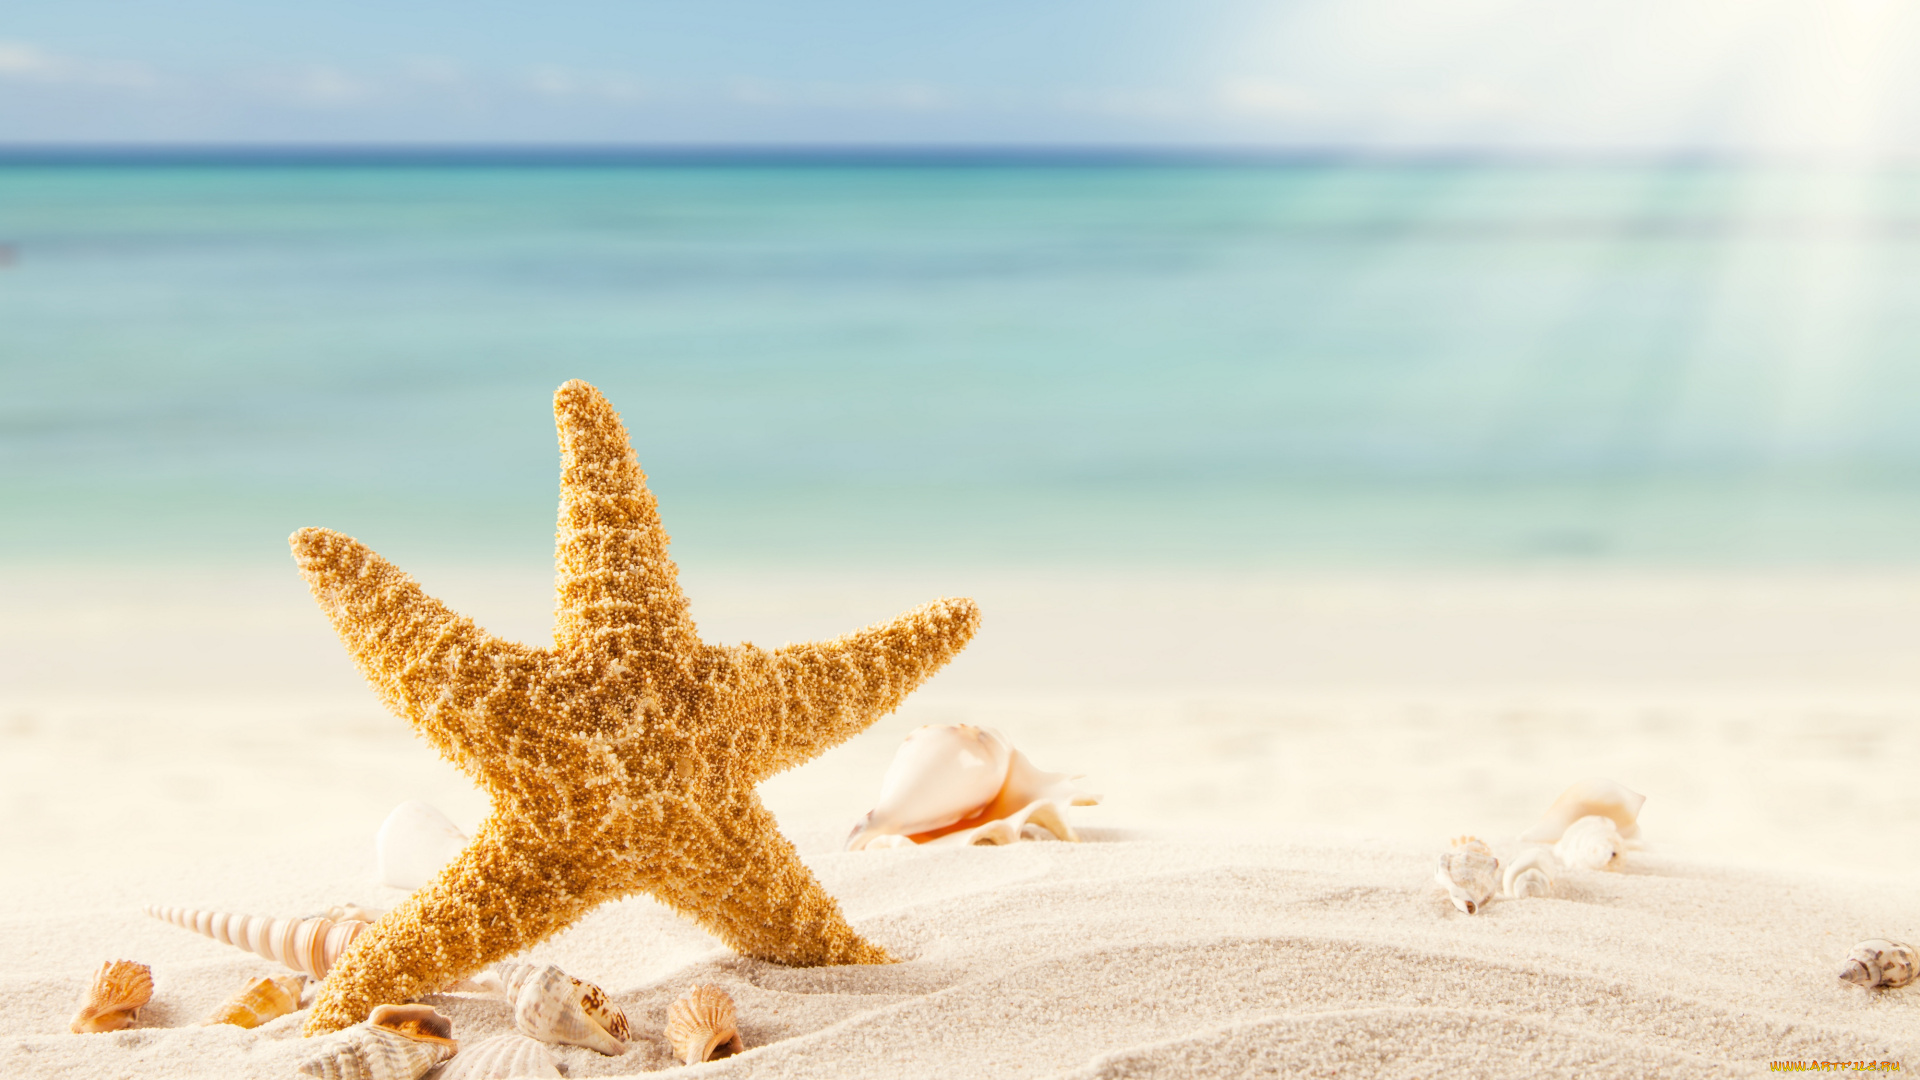 разное, ракушки, , кораллы, , декоративные, и, spa-камни, tropics, морская, звезда, песок, пляж, starfish, sand, море, тропики, shells, beach, sea